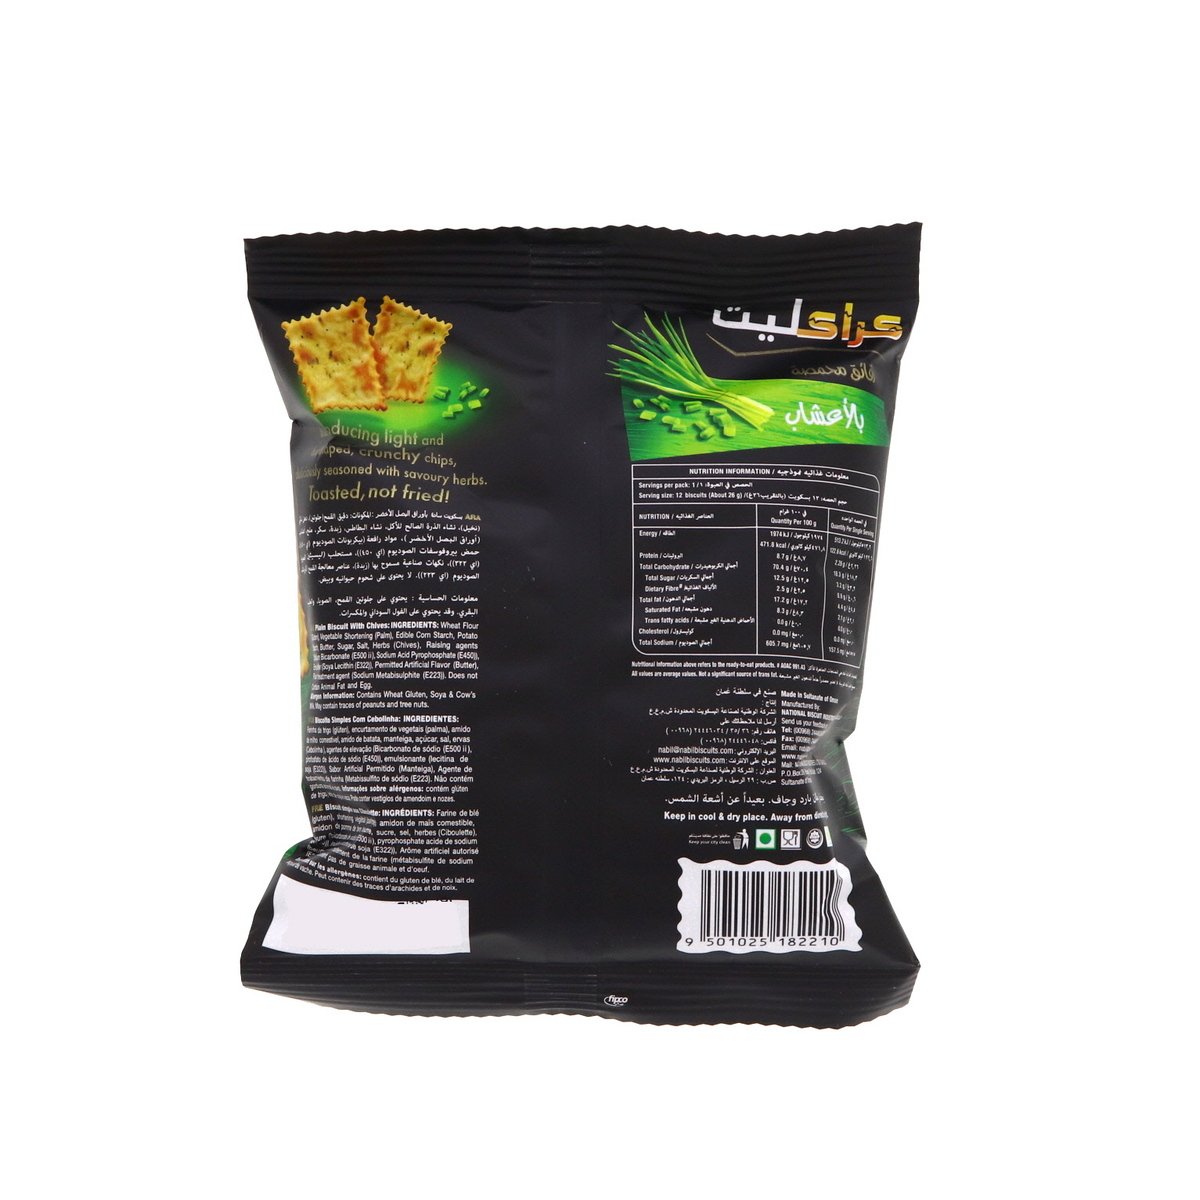 Kracklite Toasted Chips Herbs 12 x 26 g